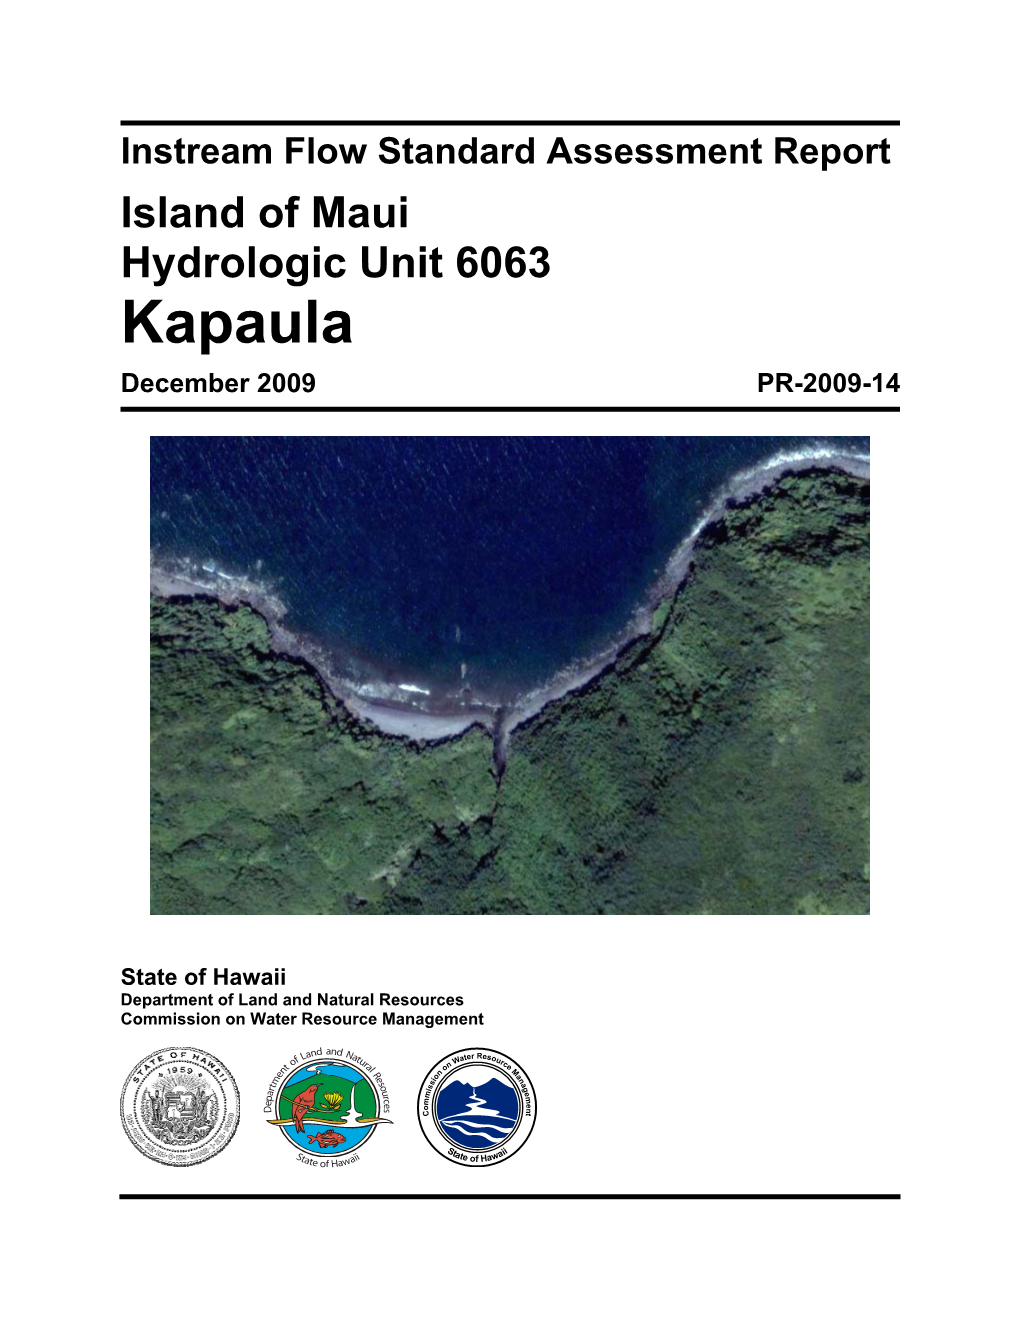 Instream Flow Standard Assessment Report Island of Maui Hydrologic Unit 6063 Kapaula December 2009 PR-2009-14